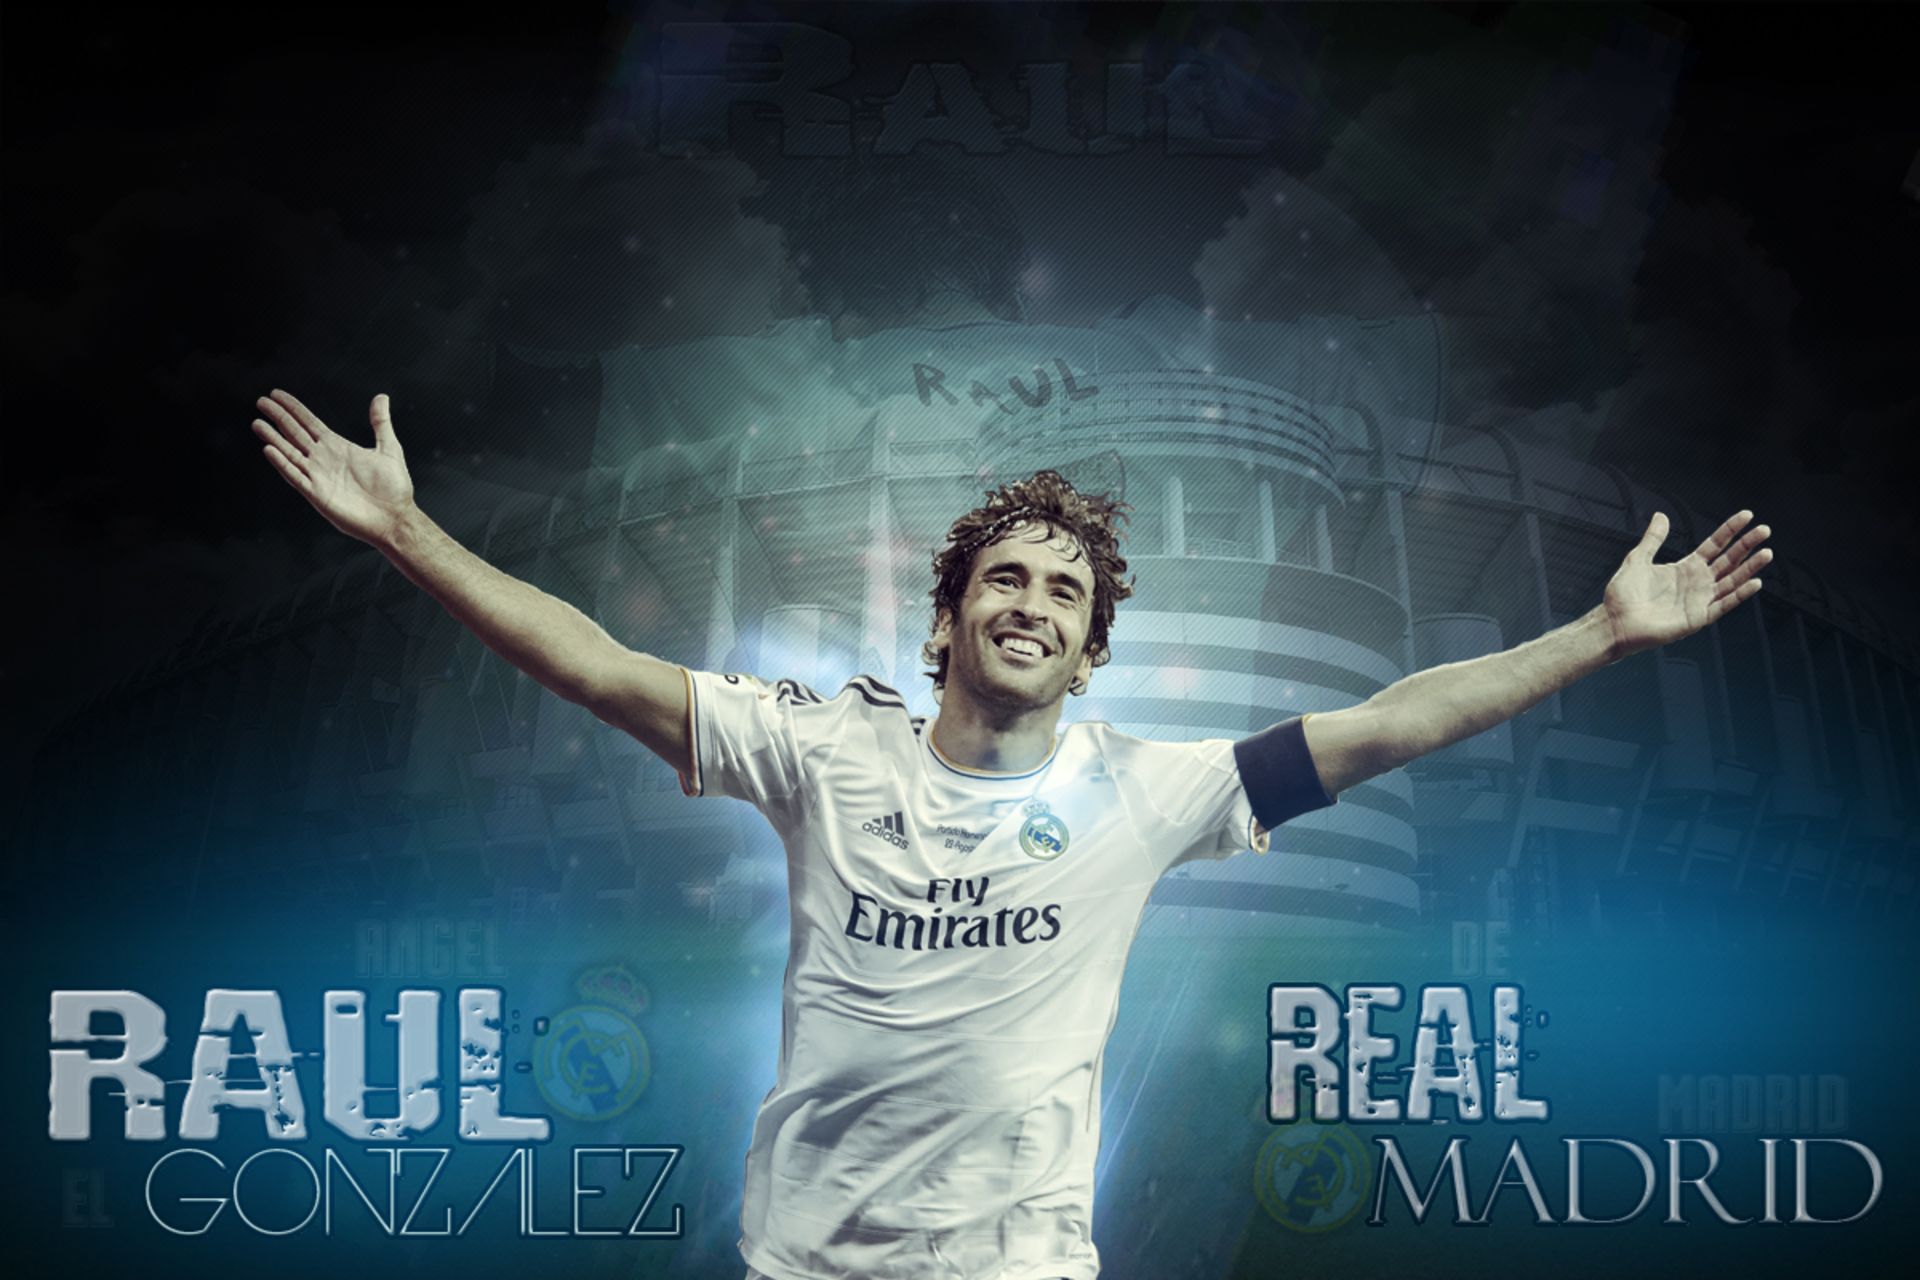 Descarga gratuita de fondo de pantalla para móvil de Fútbol, Deporte, Real Madrid C F, Raúl González Blanco.